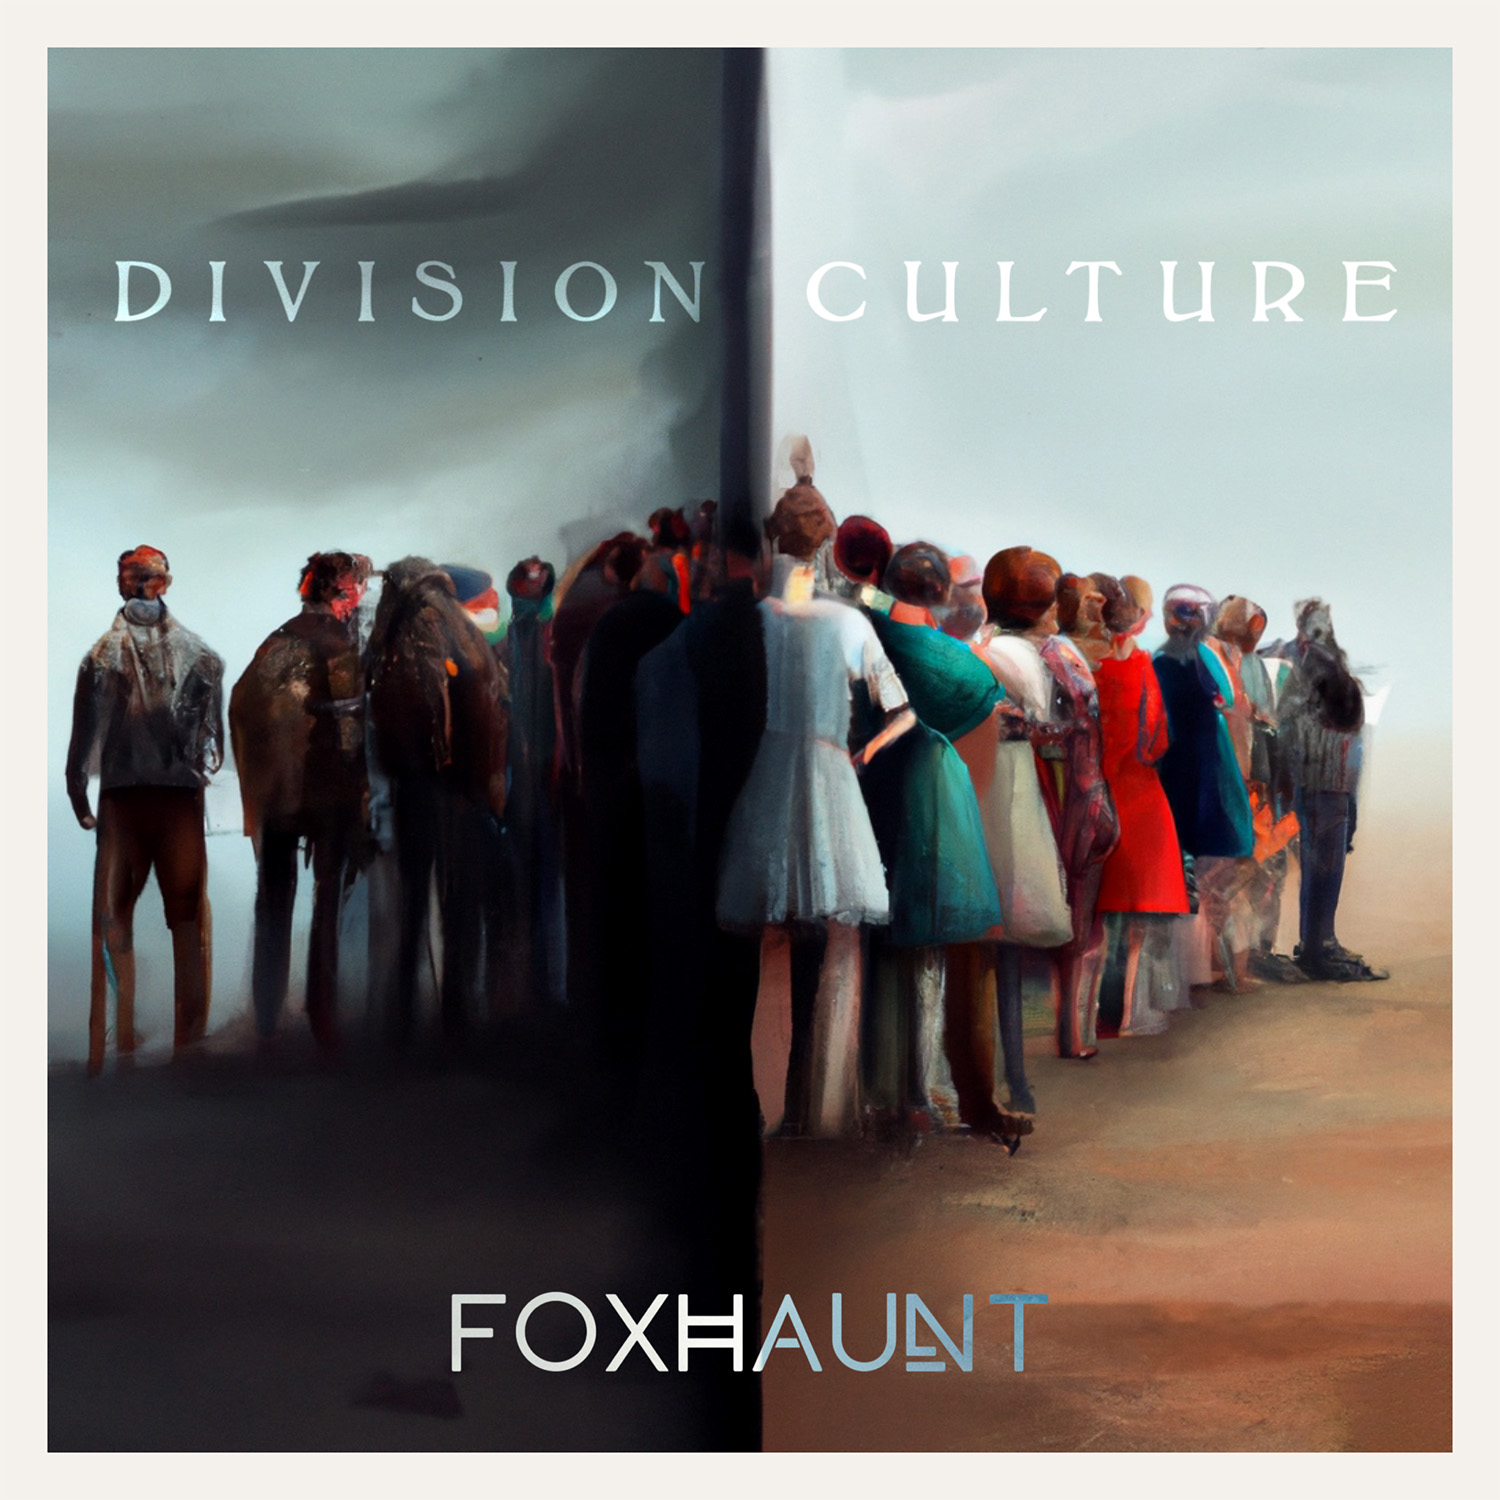 Foxhaunt ‘Division Culture’ EP Artwork